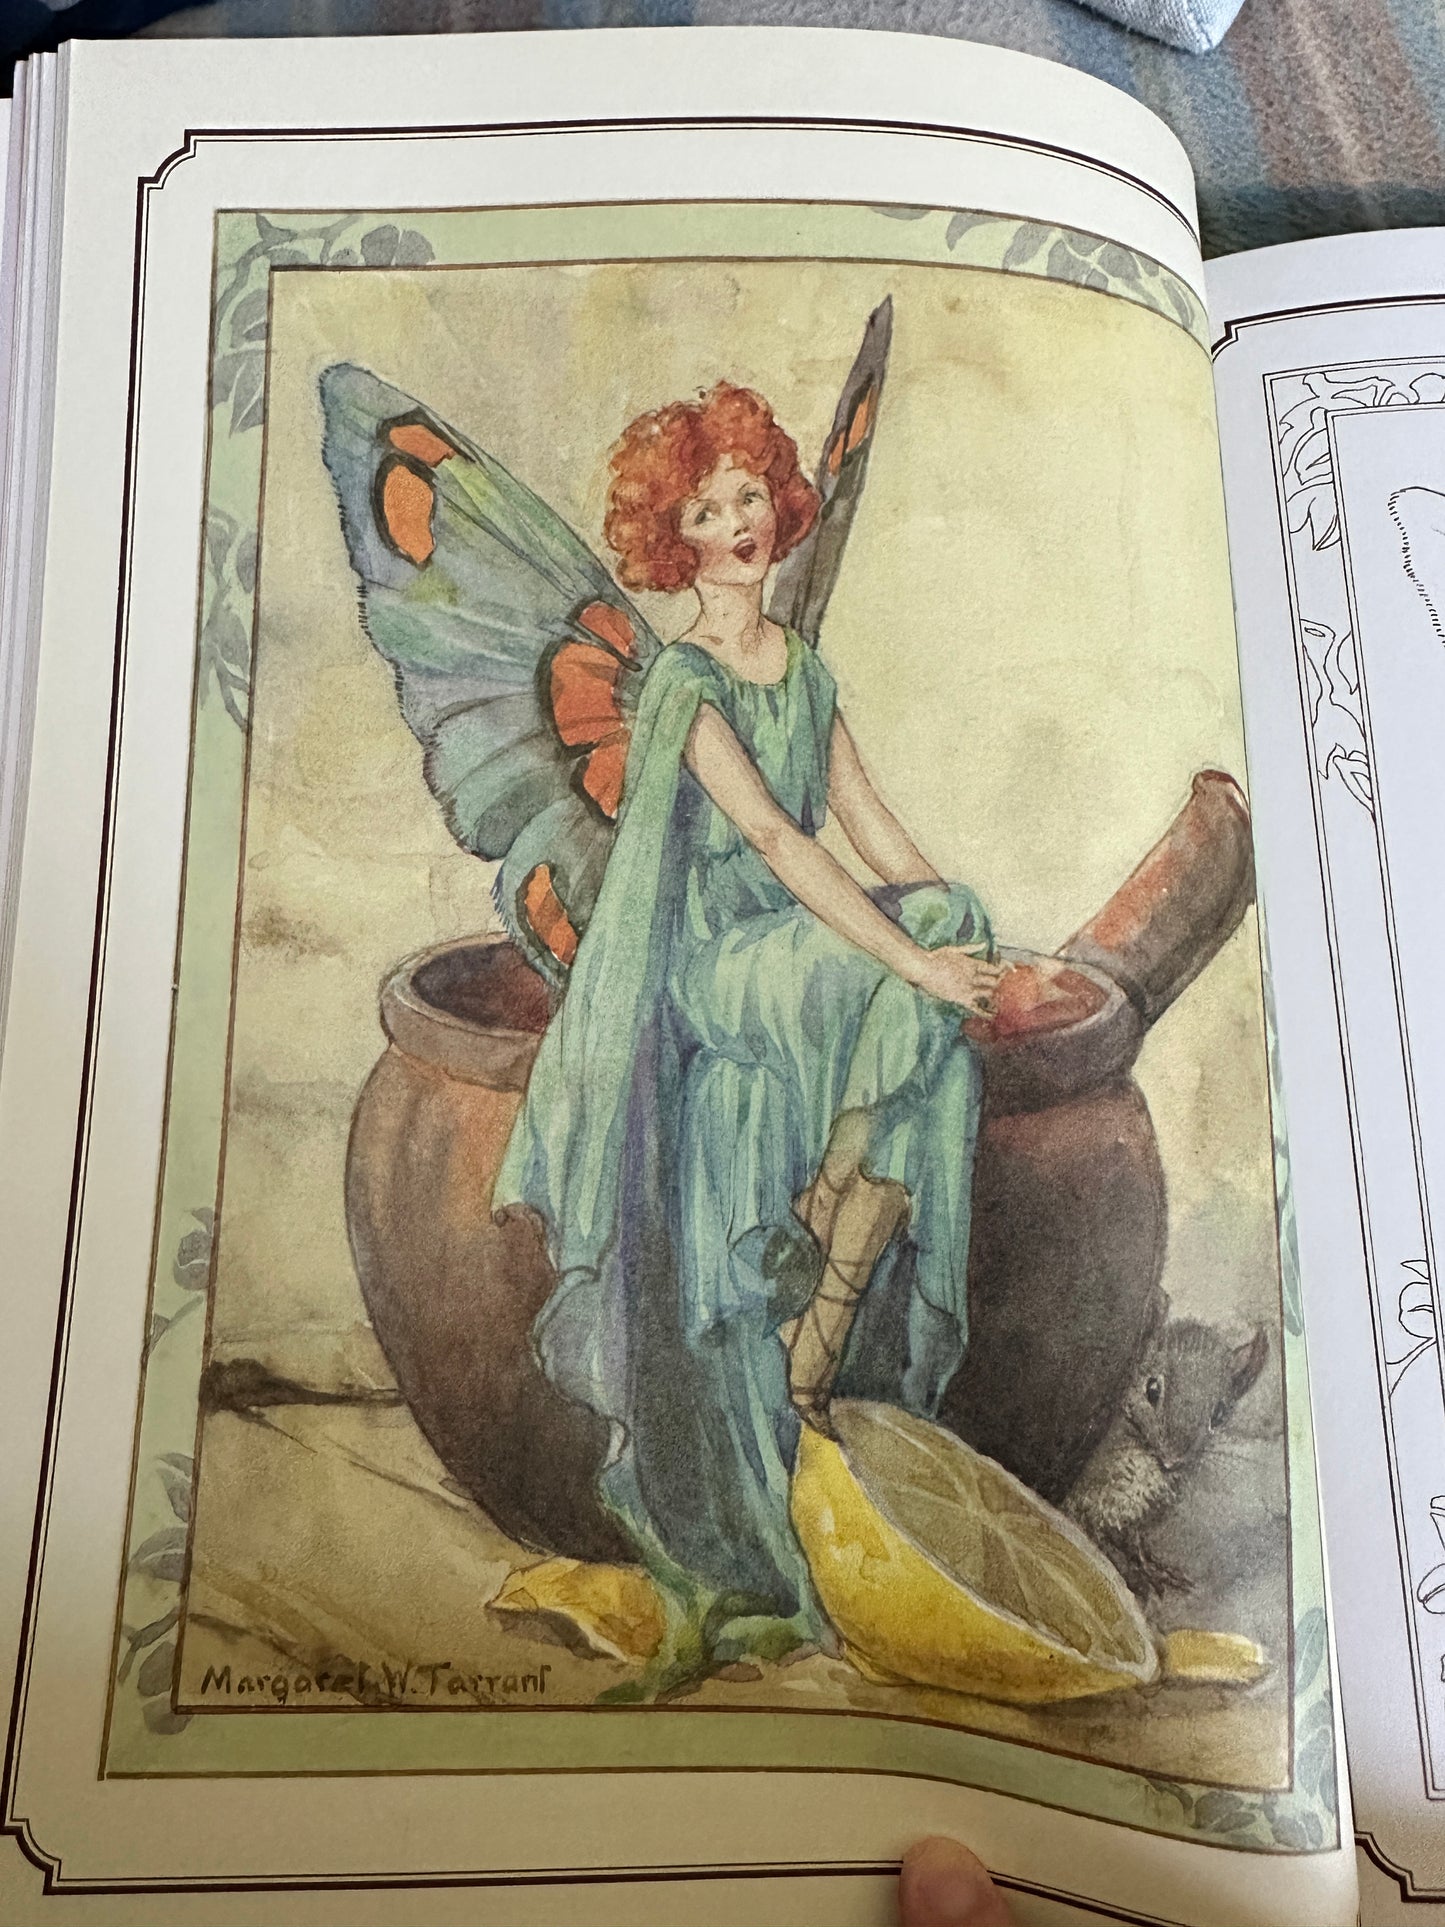 2021*1st* The Enchanting Fairies Colouring Book (Margaret Tarrant illustration) Arcturus Publishing